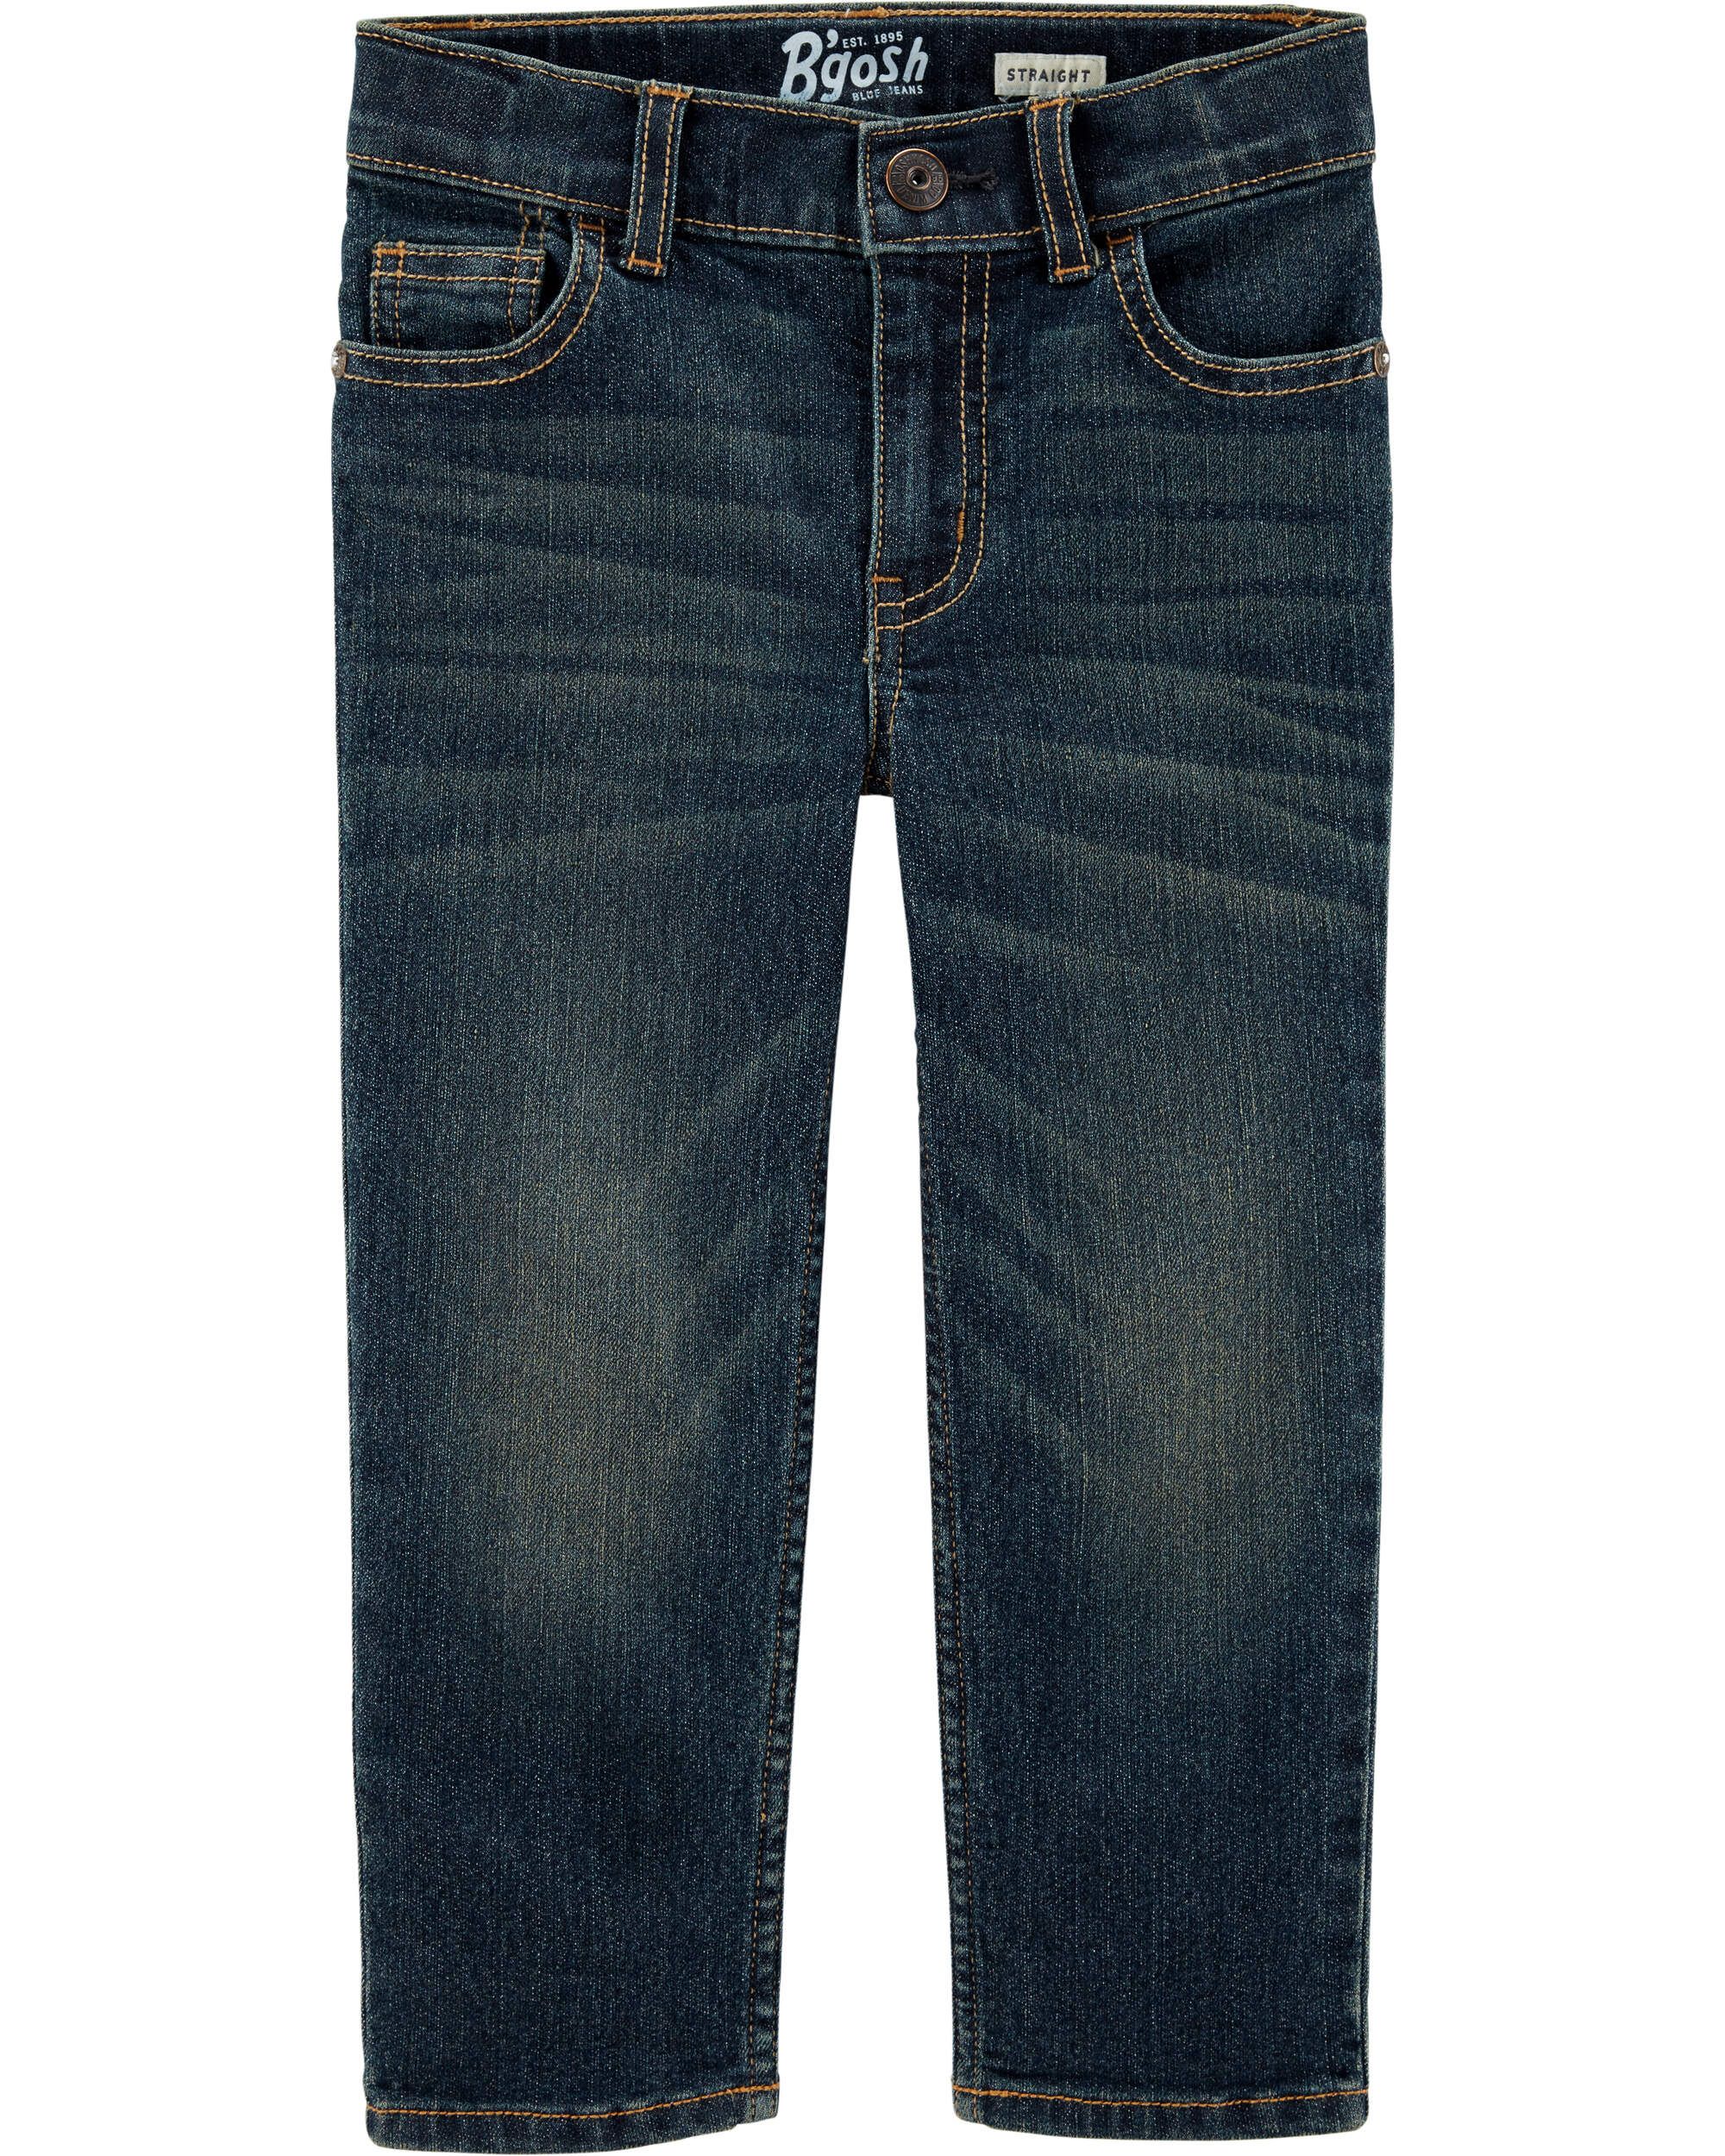 Straight Jeans in Authentic Tint | OshKosh B'gosh